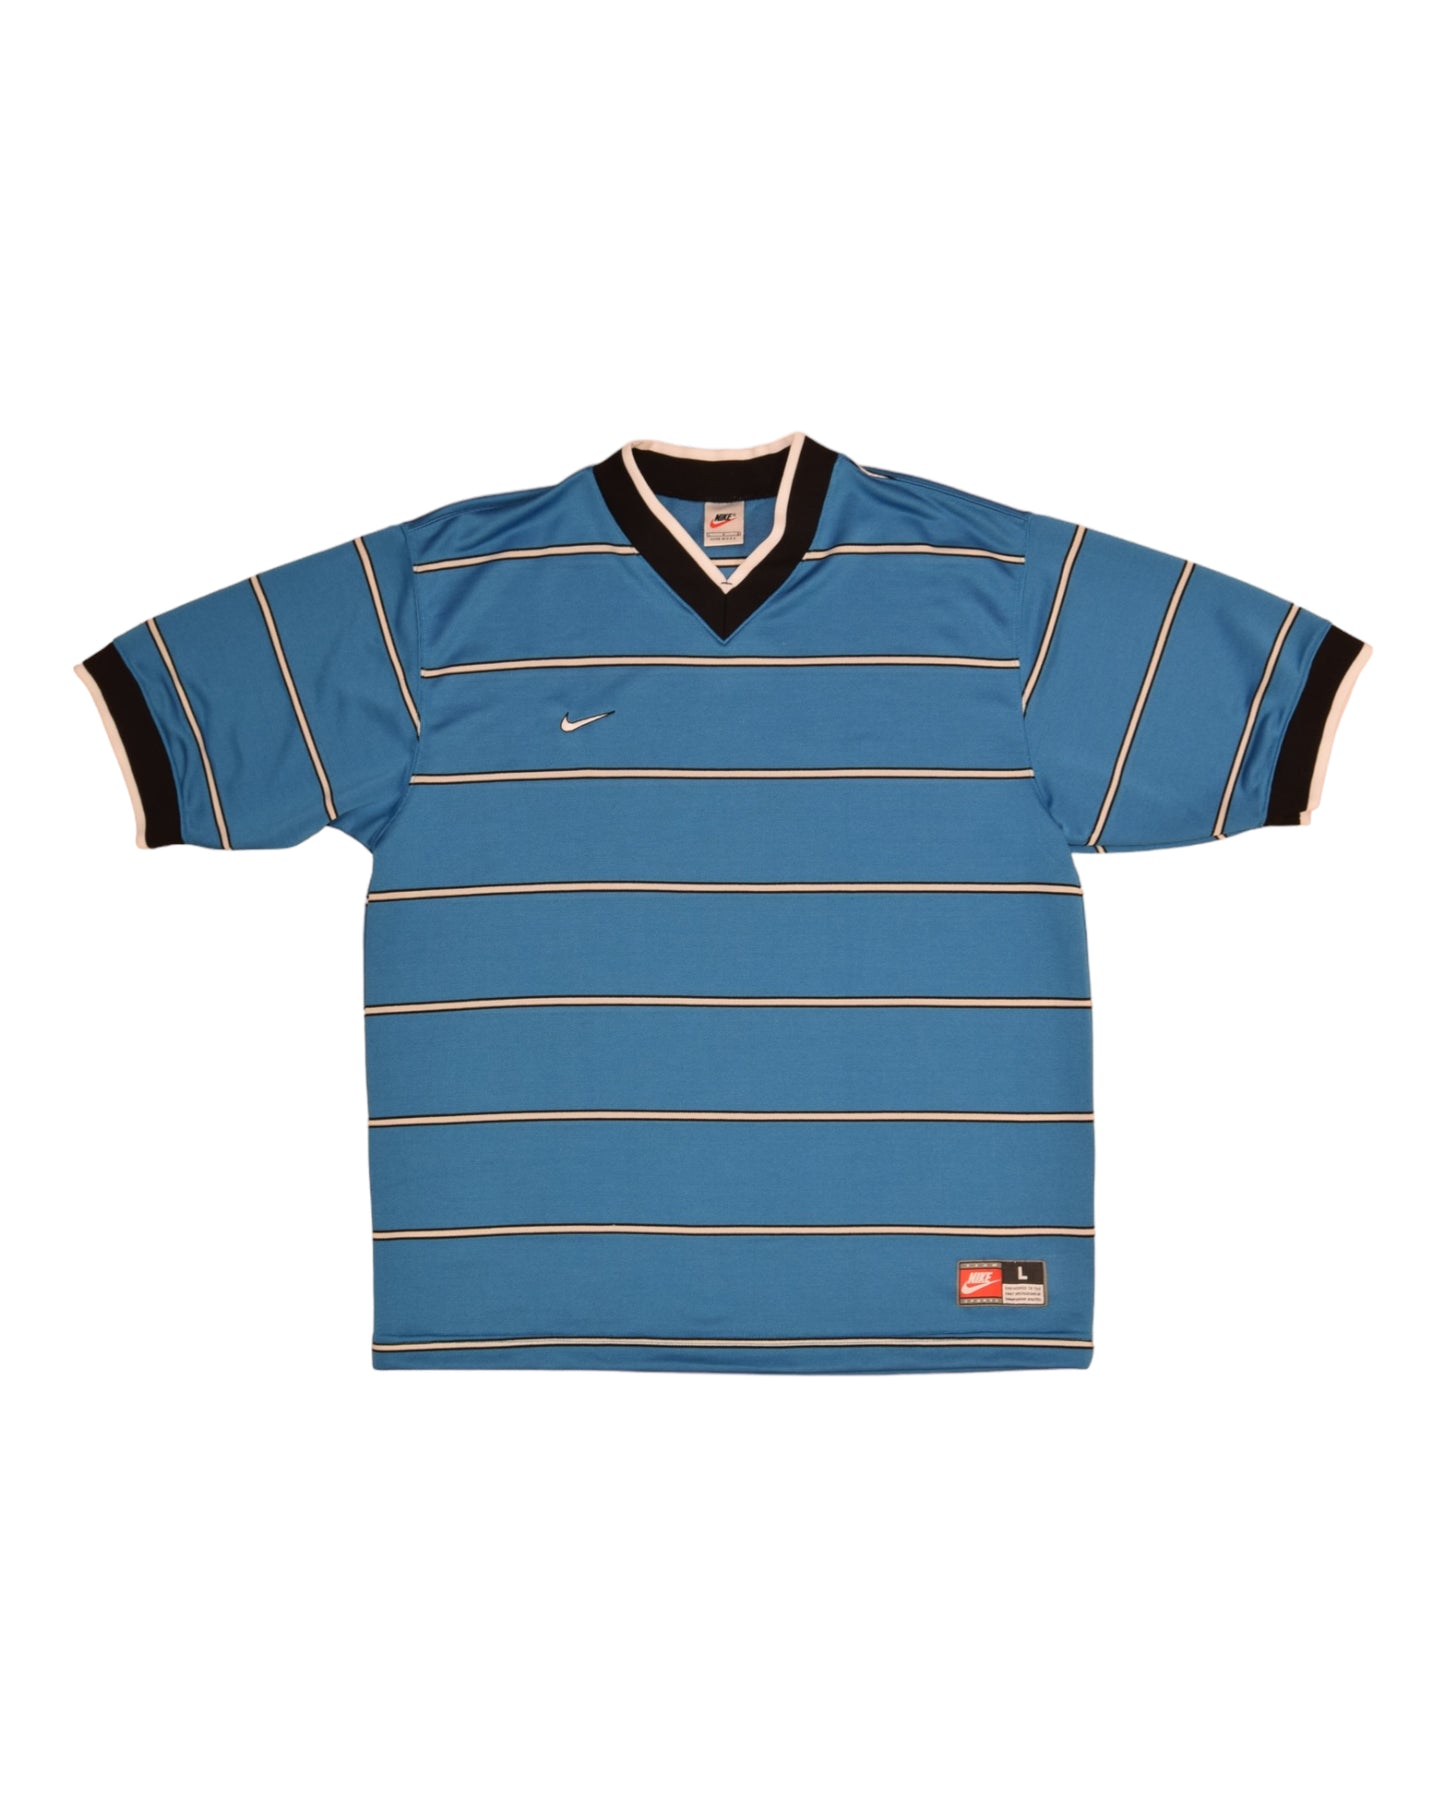 Vintage 90's Nike Team Sports Football Jersey / T-Shirt Swoosh Horizontal Strippes Blue White Size L - XL